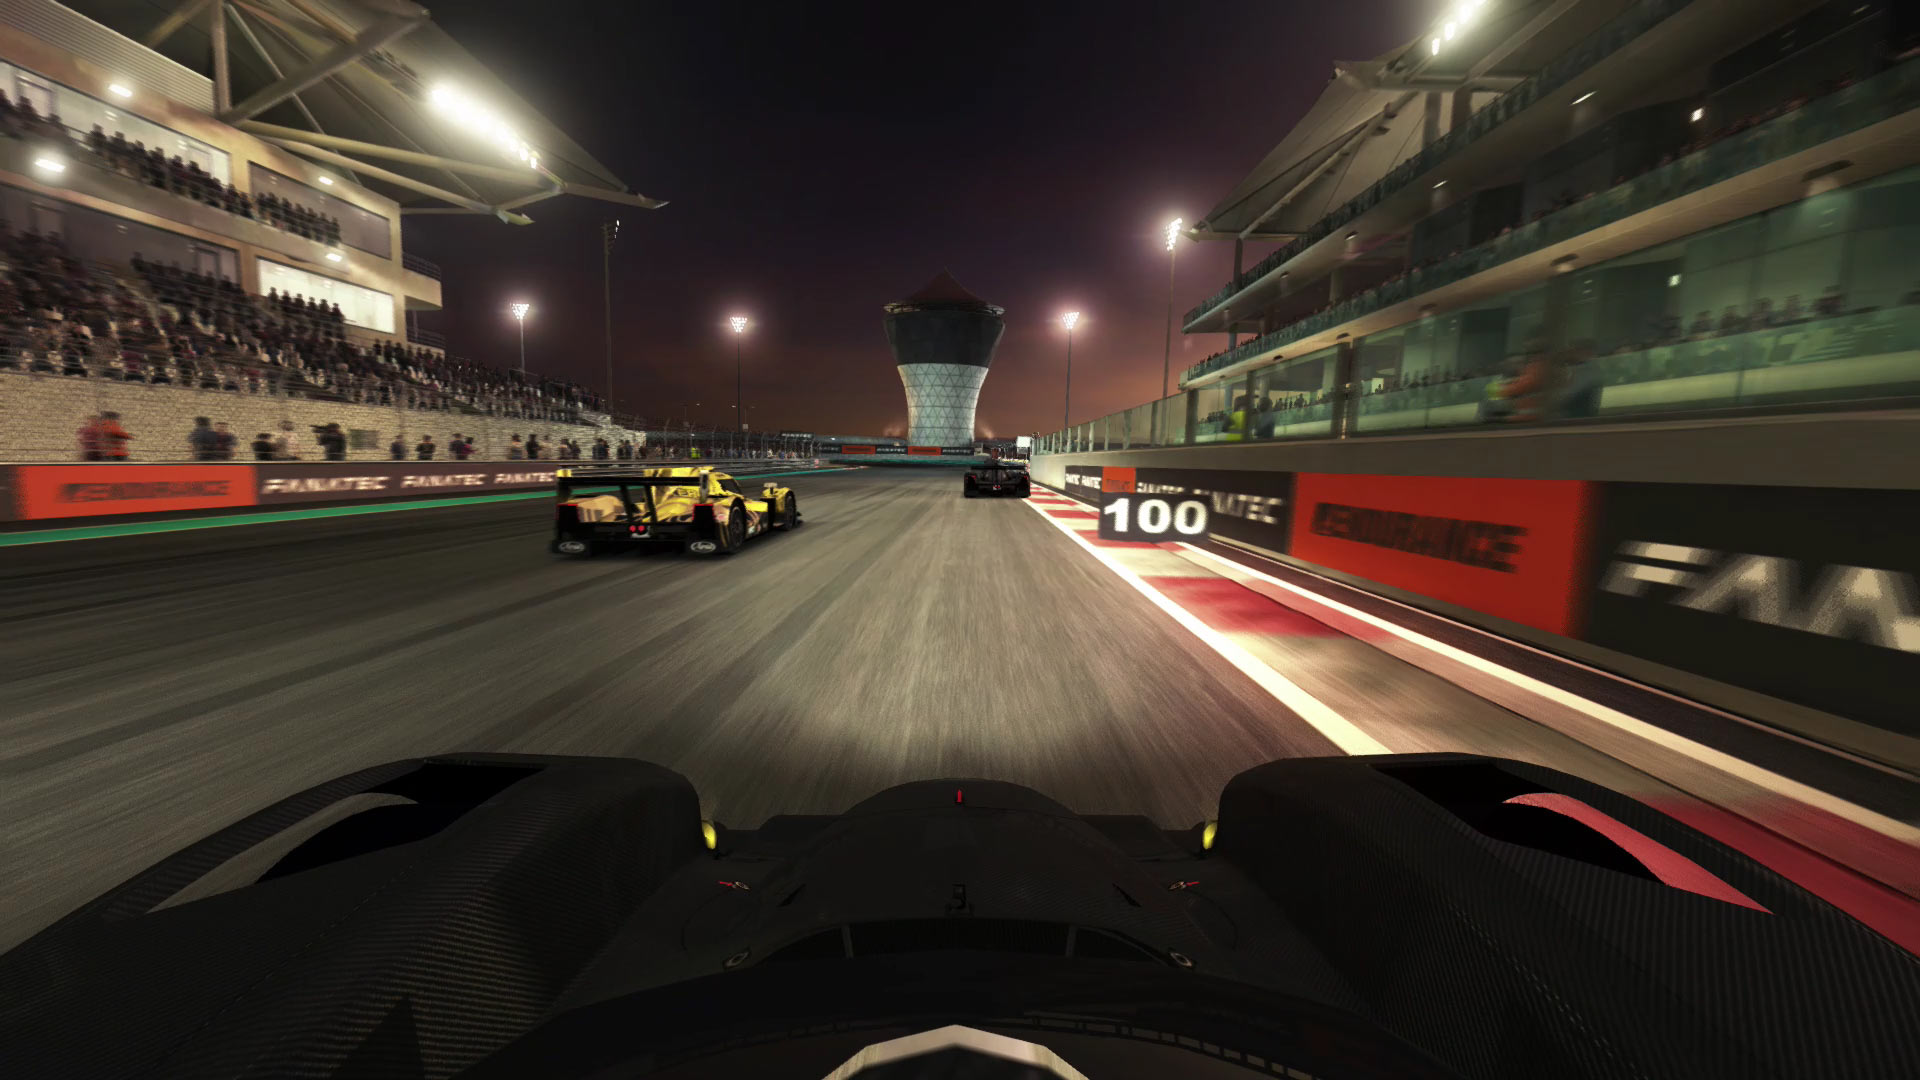 GRID™ Autosport Custom Edition by Feral Interactive Ltd